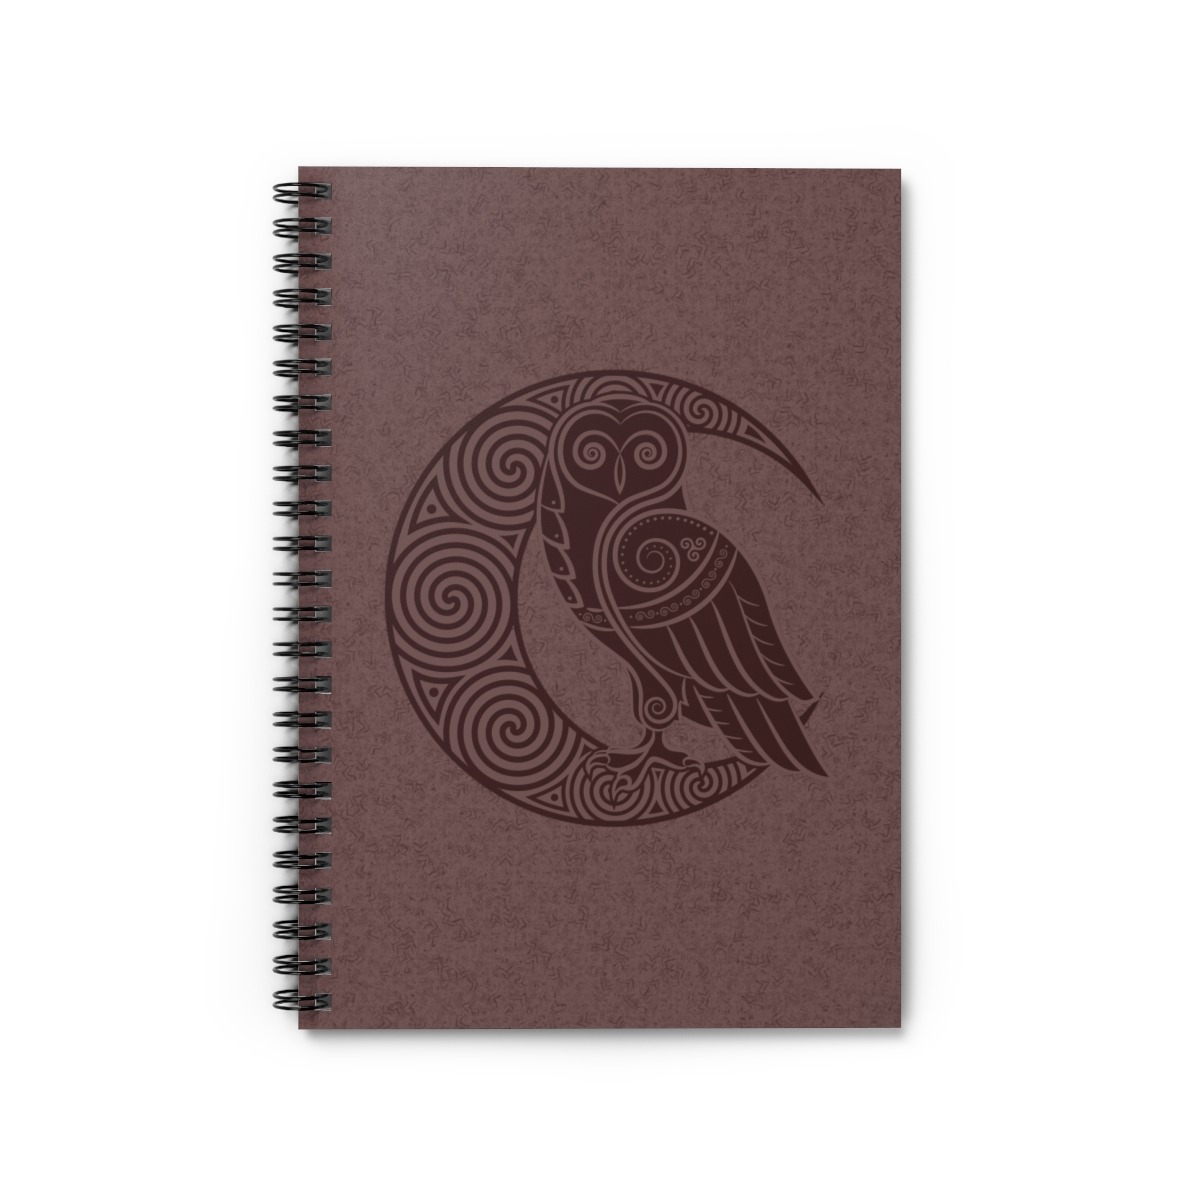 Maroon Owl Crescent Moon Spiral Notebook